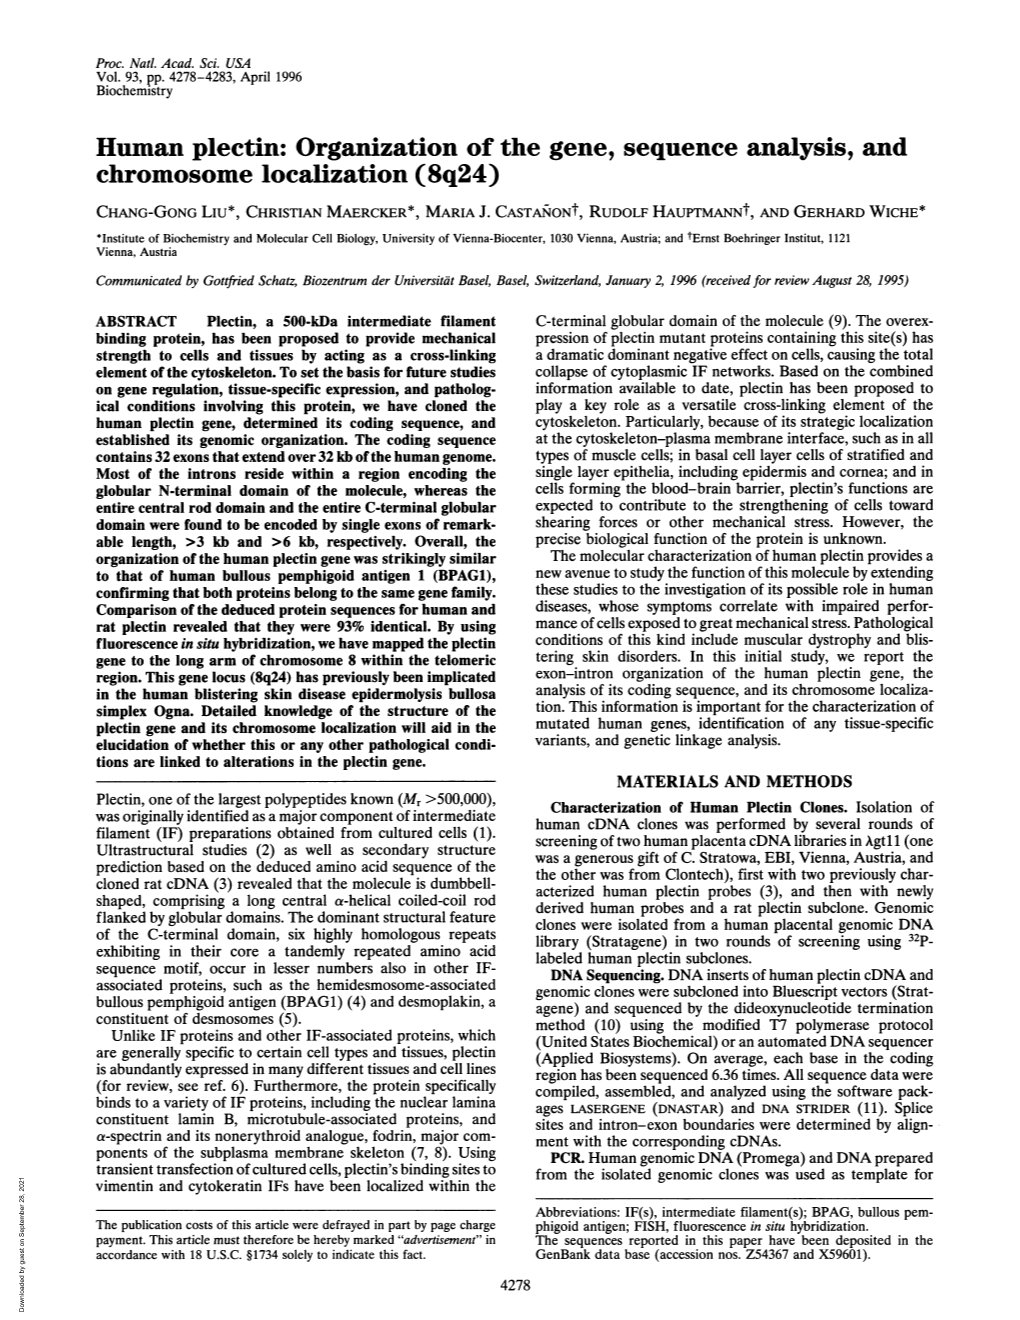 Human Plectin: Organization of the Gene, Sequence Analysis, and Chromosome Localization (8Q24) CHANG-GONG LIU*, CHRISTIAN MAERCKER*, MARIA J